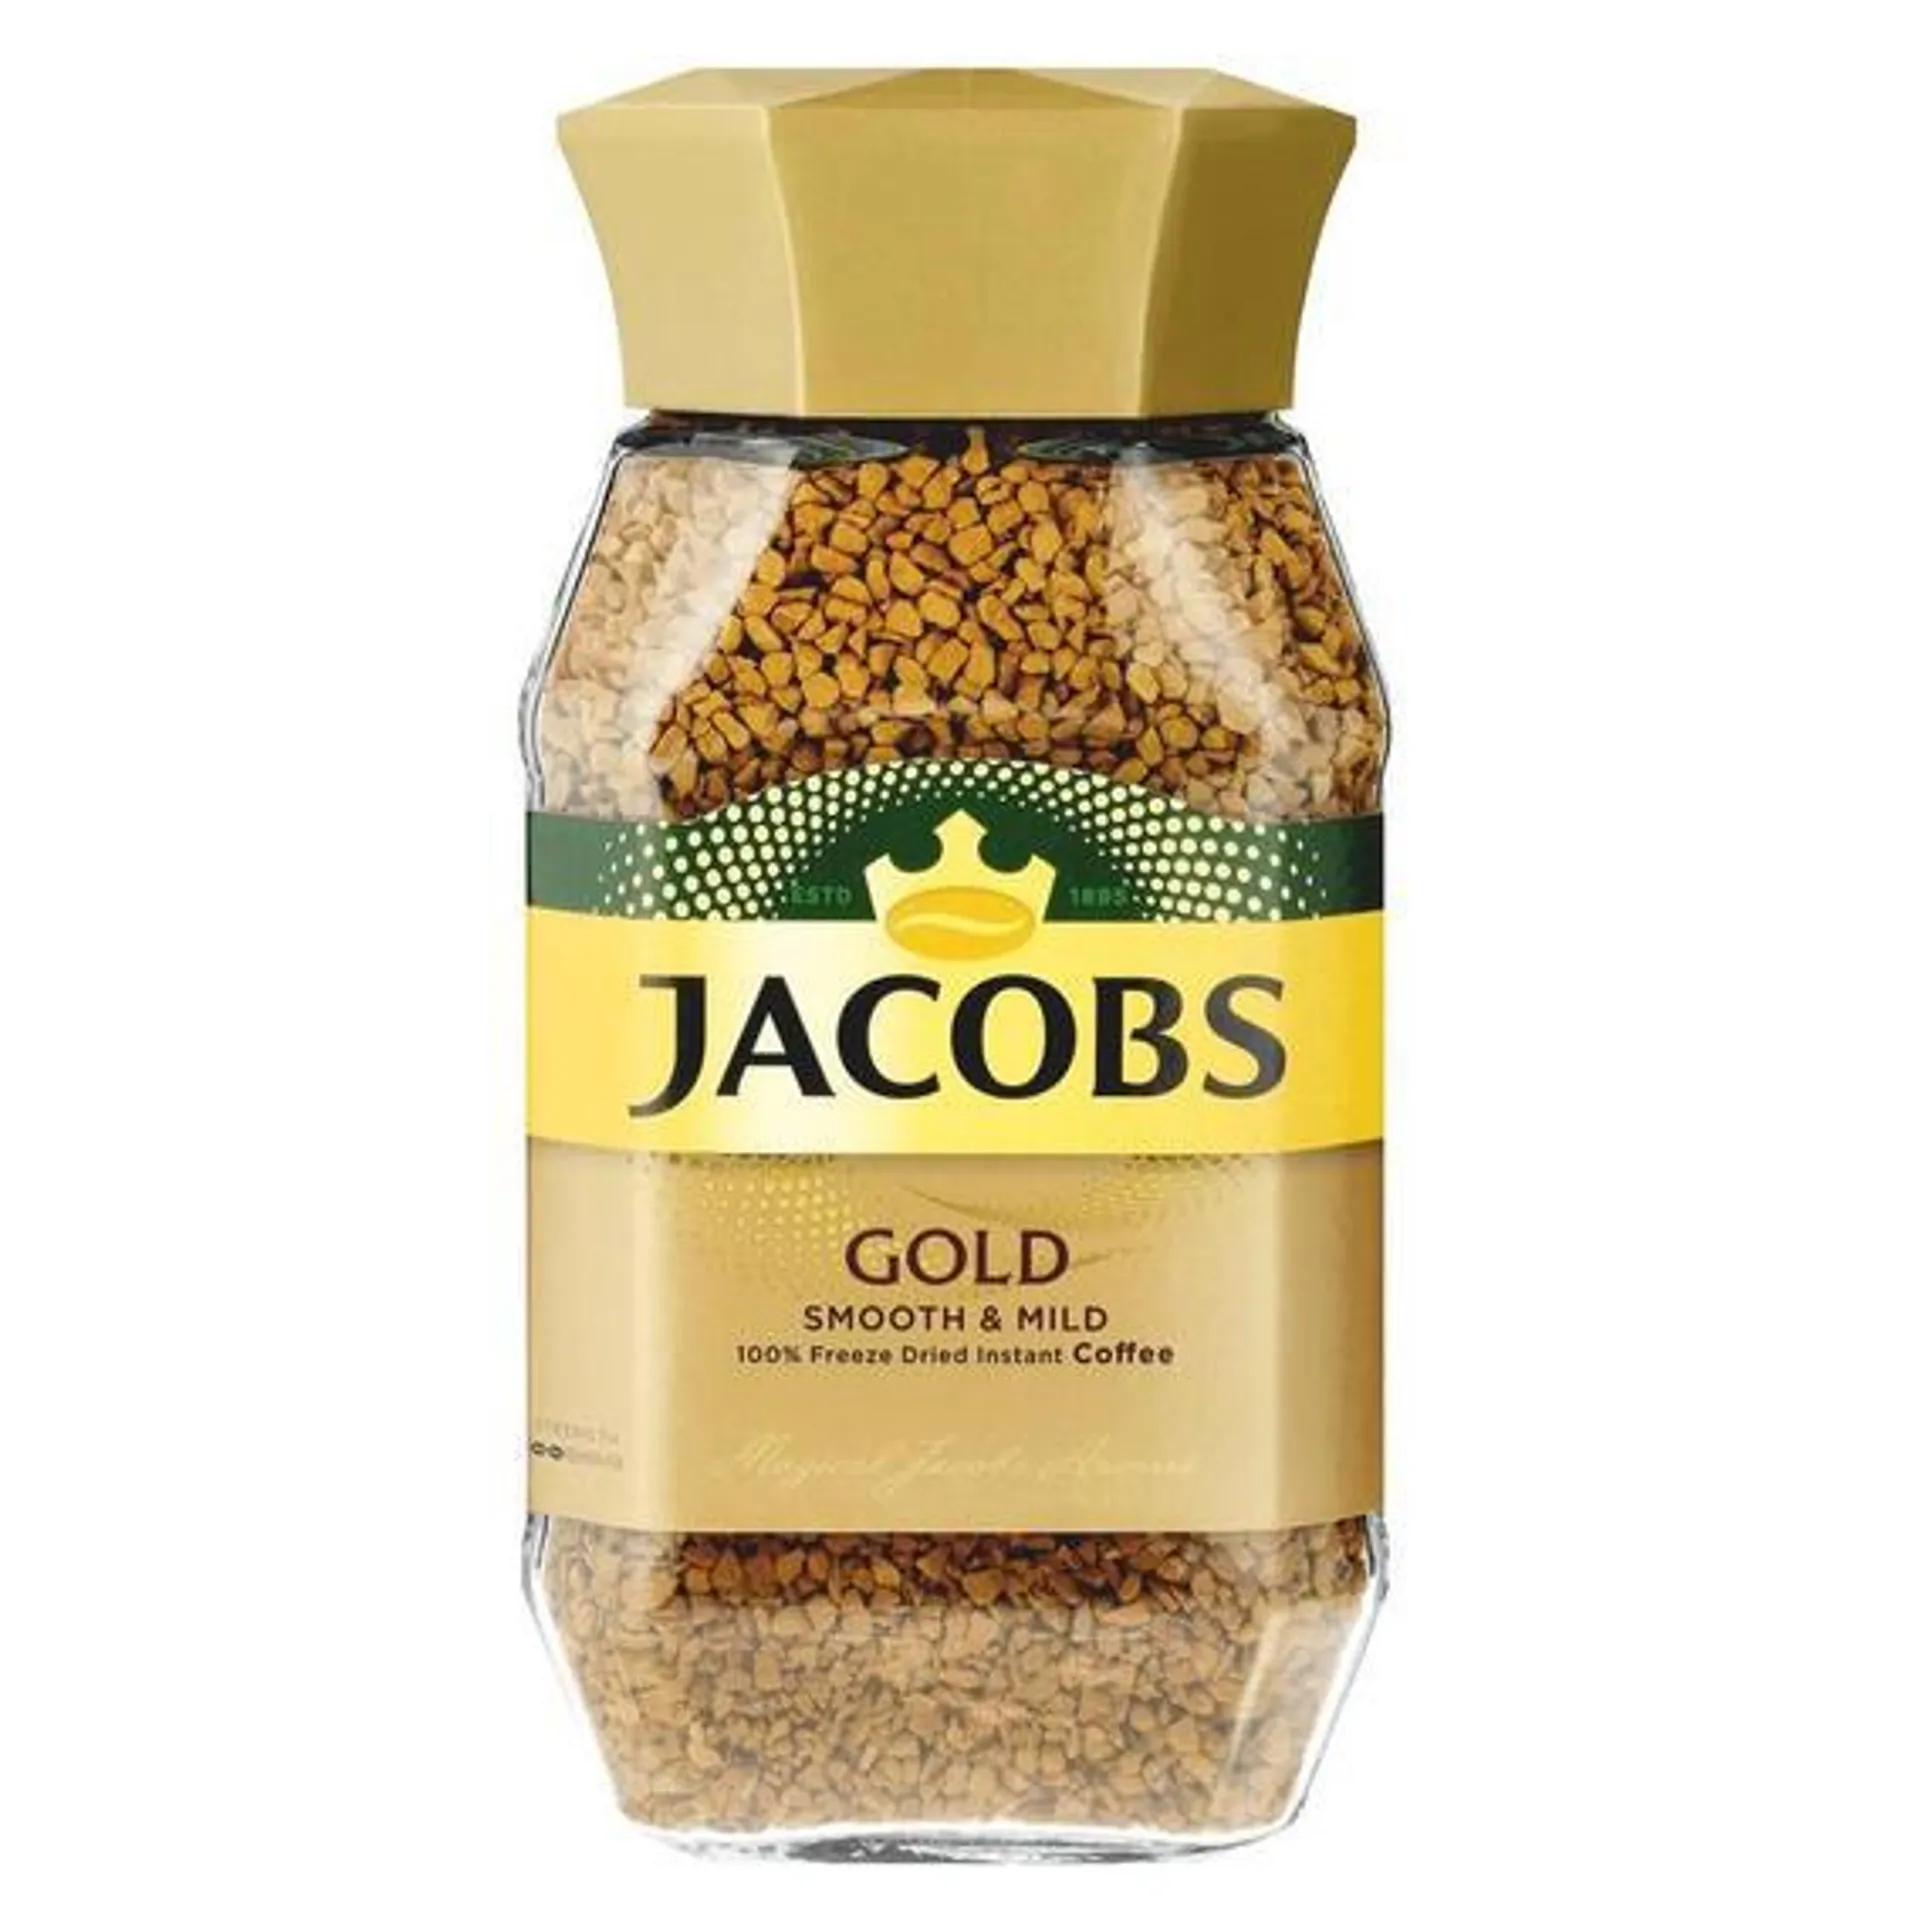 Jacobs/Kron Gold Coffee 200, G